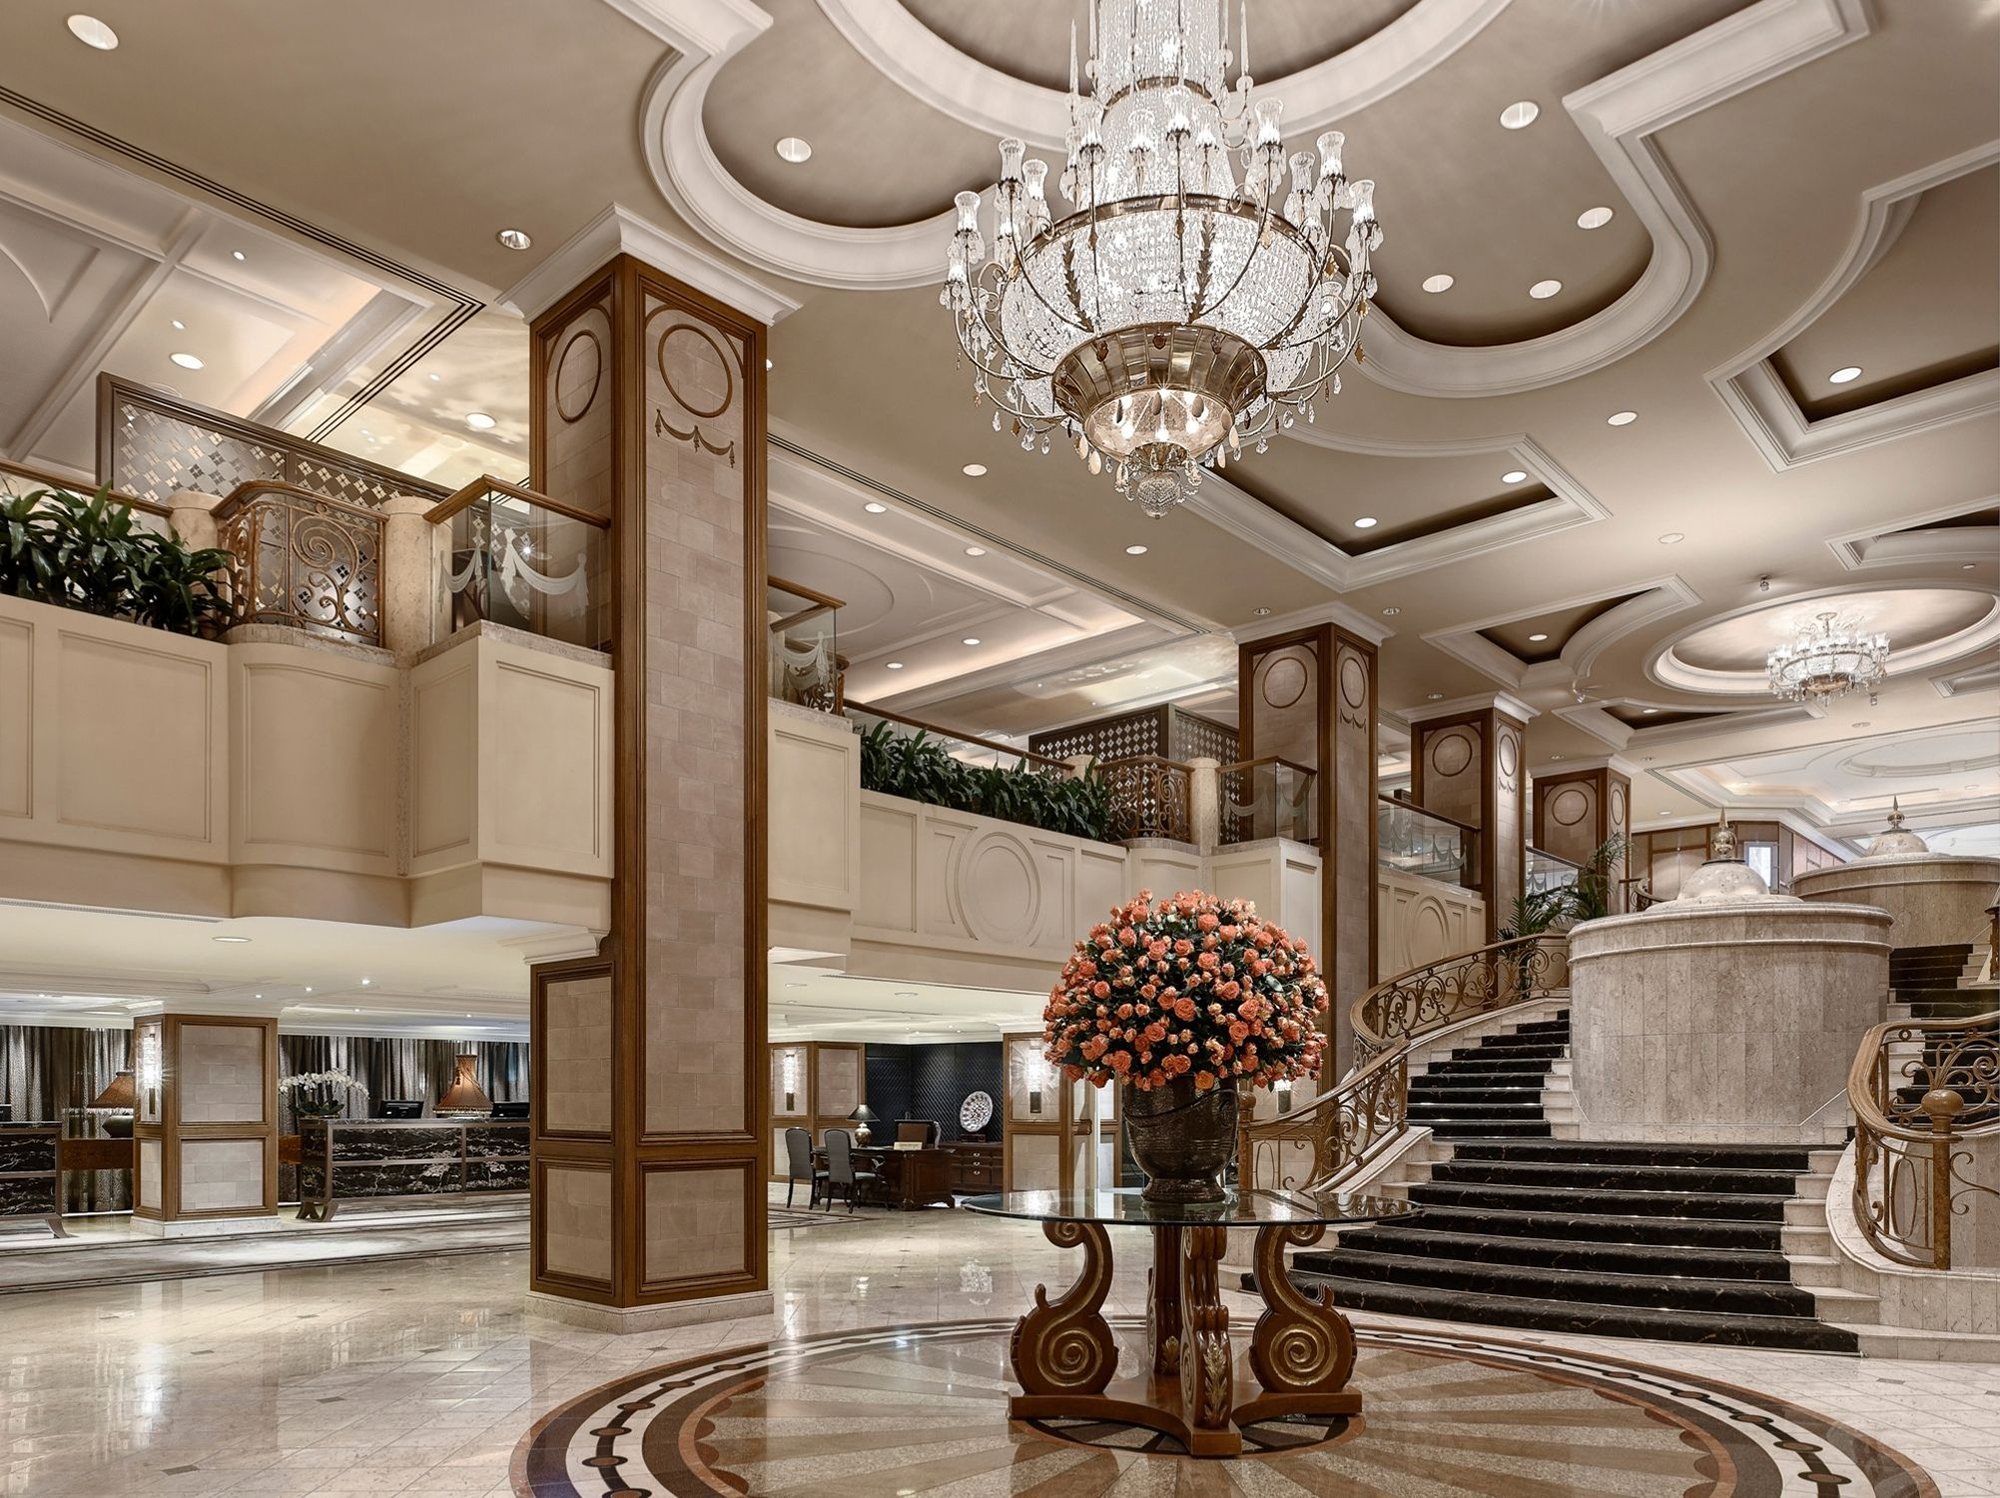 tlmel-home-did-you-know-hotel-lobby-chandelier.jpg